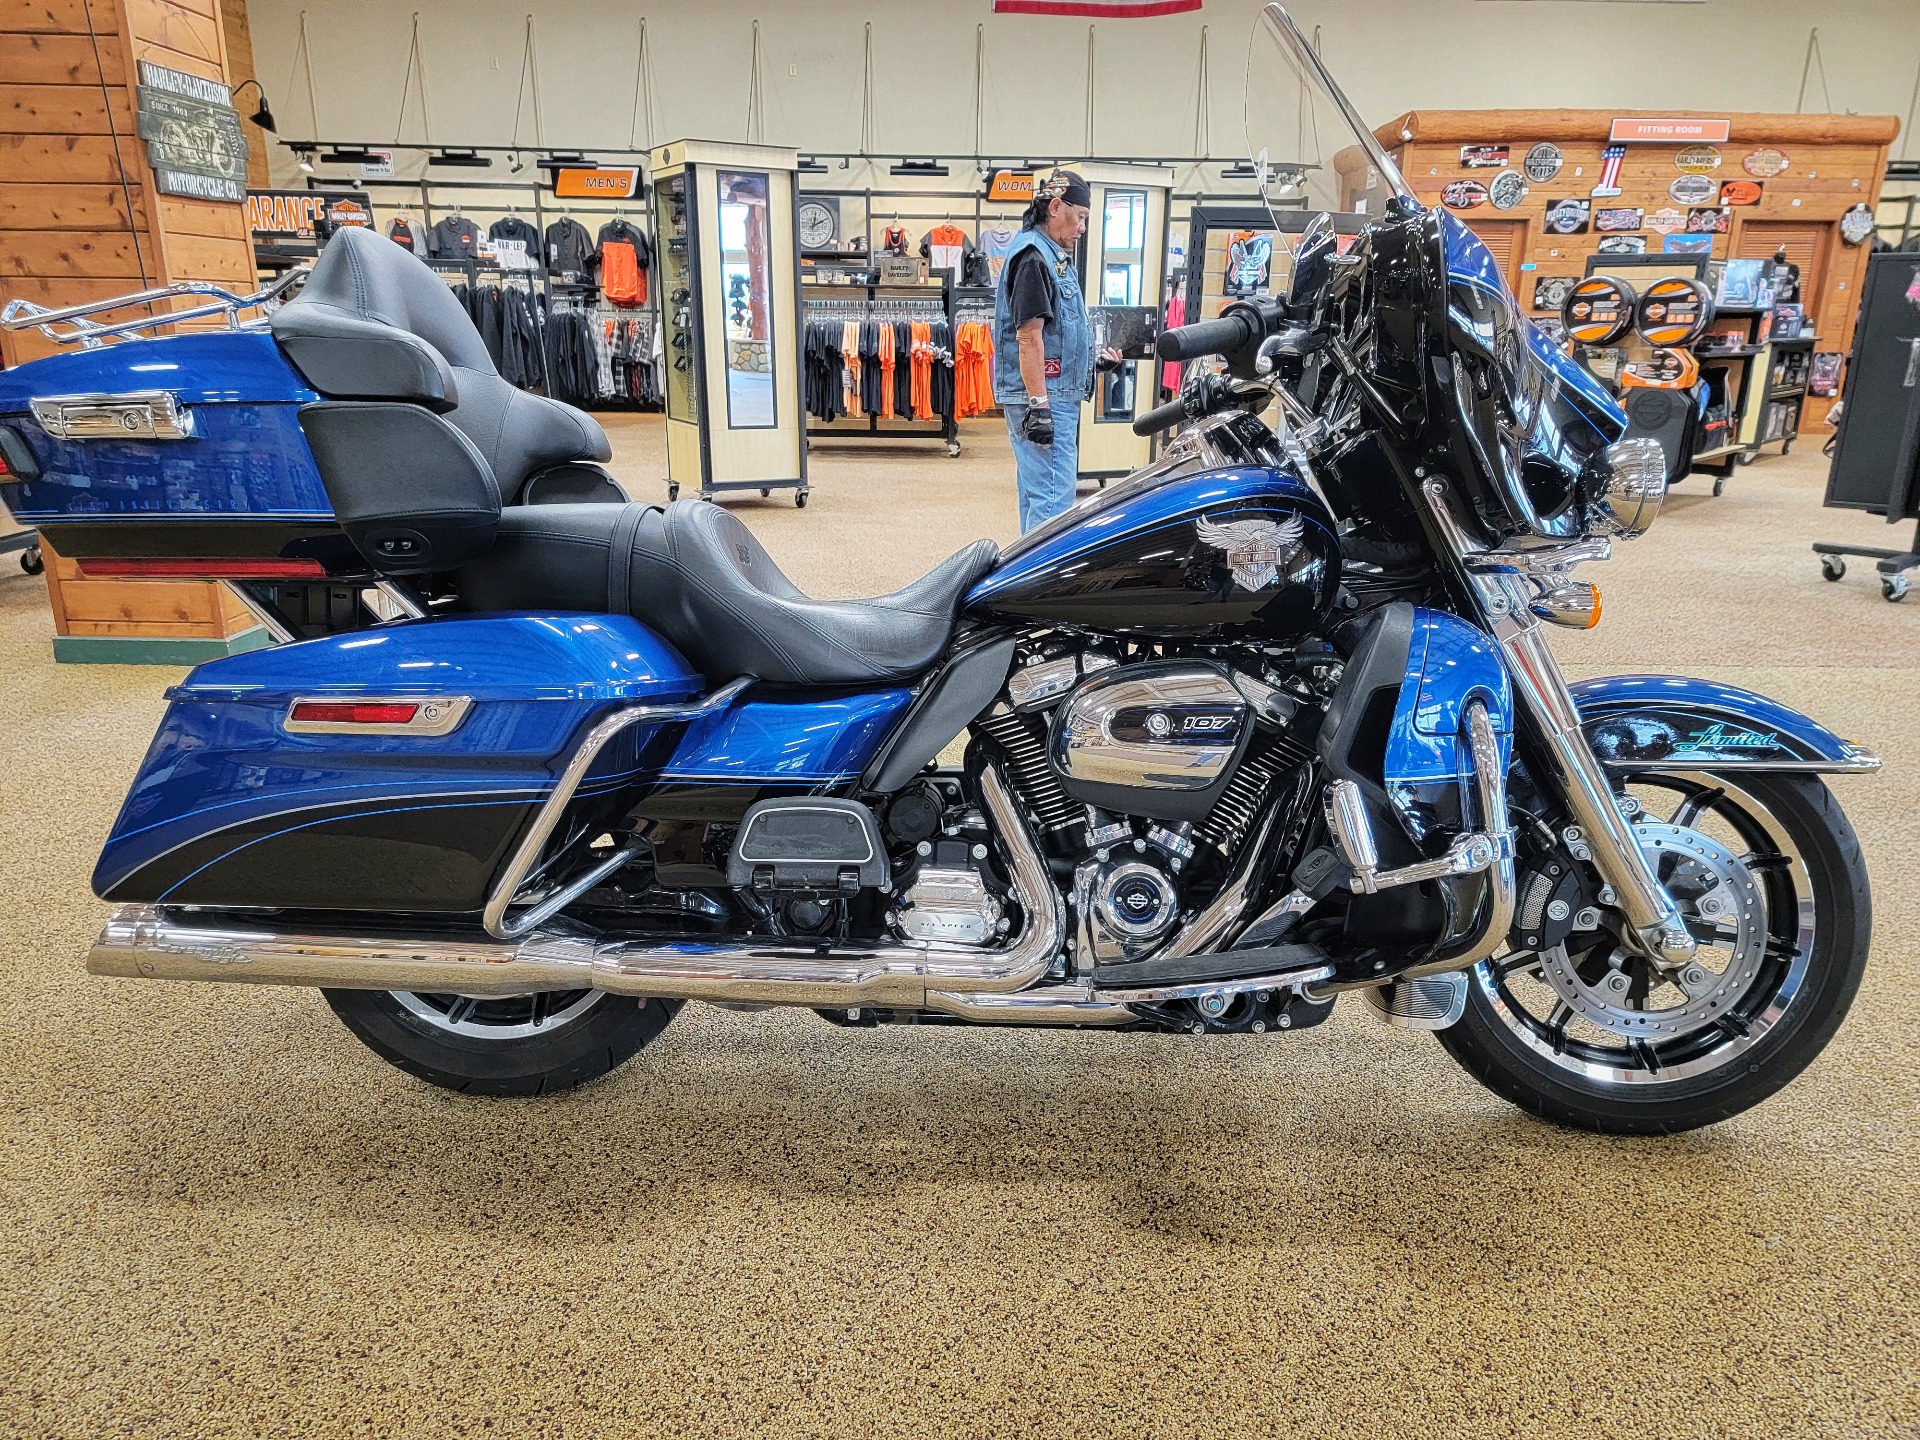 Used 2018 Harley Davidson 115th Anniversary Ultra Limited 115th Anniversary Legend Blue Vivid Black Motorcycles In Sauk Rapids Mn B0008